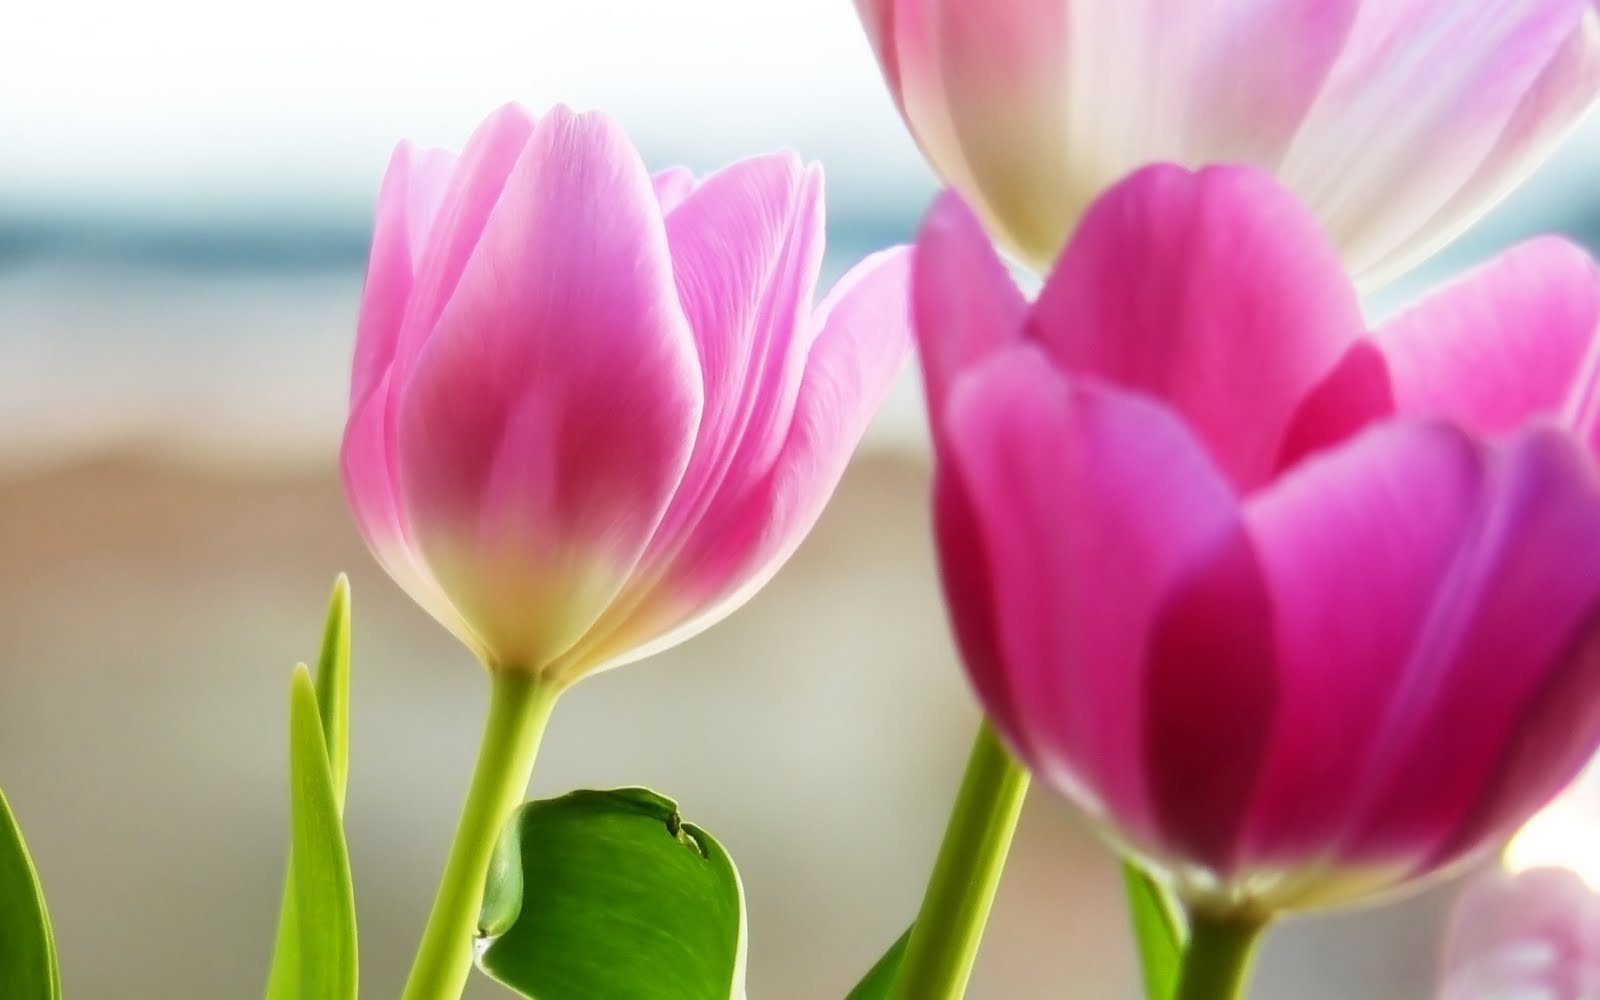 Flores wallpapers - Fondos de pantallas de Flores: Fondos de Tulipanes